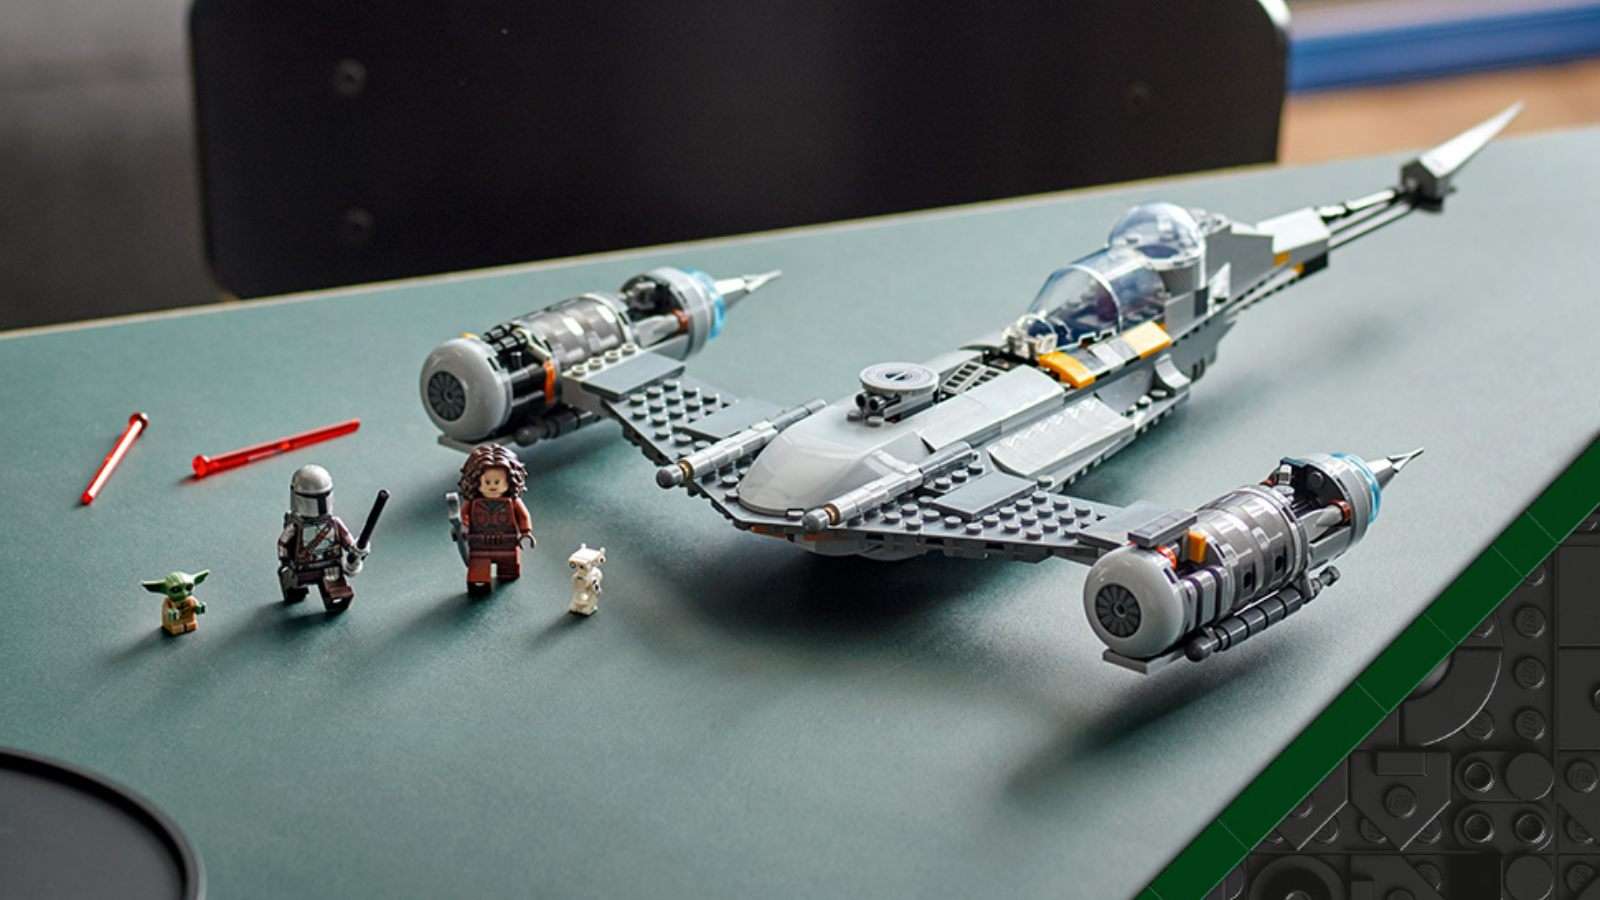 Lego Star Wars Mandalorian Starfighter and figures